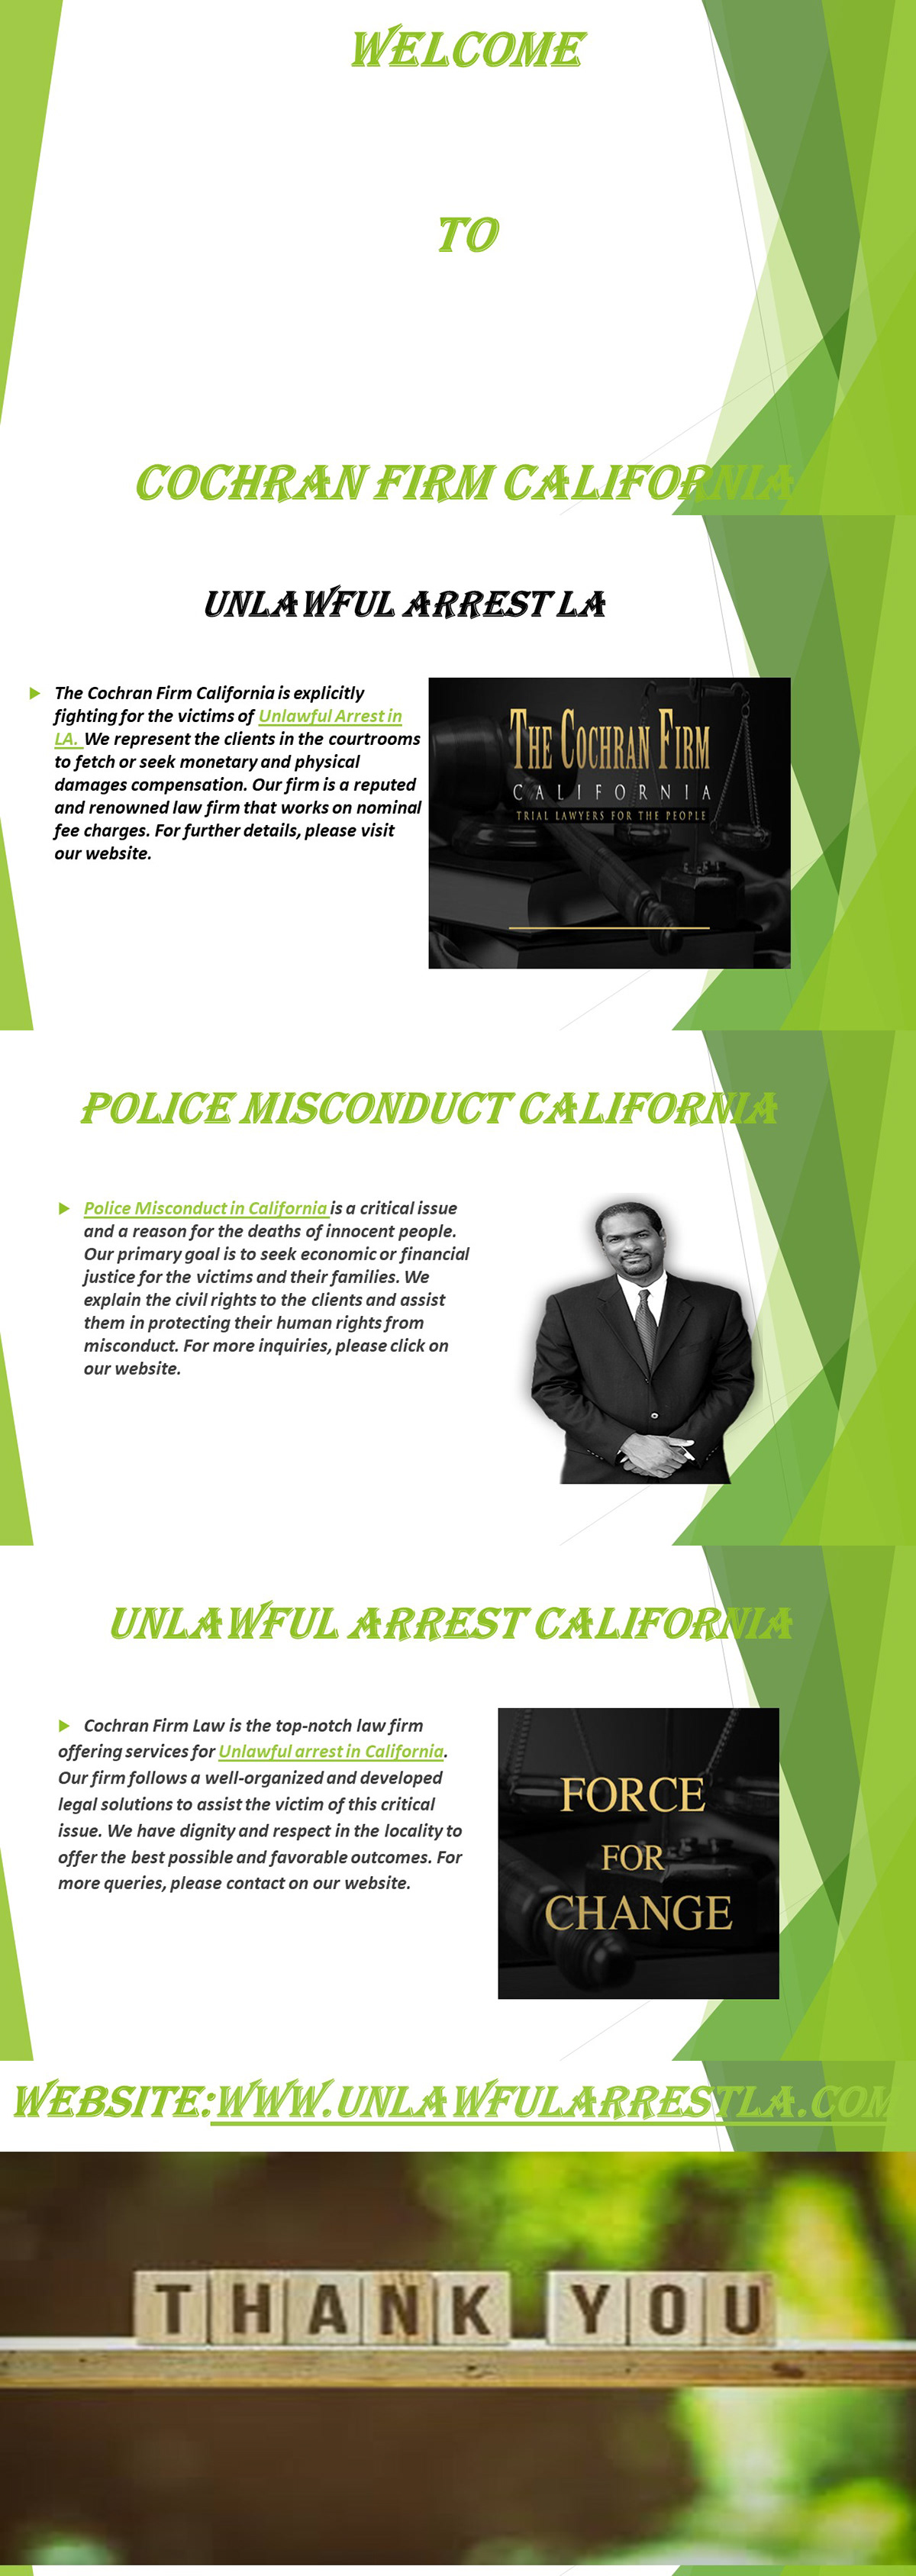 unlawful arrest LA